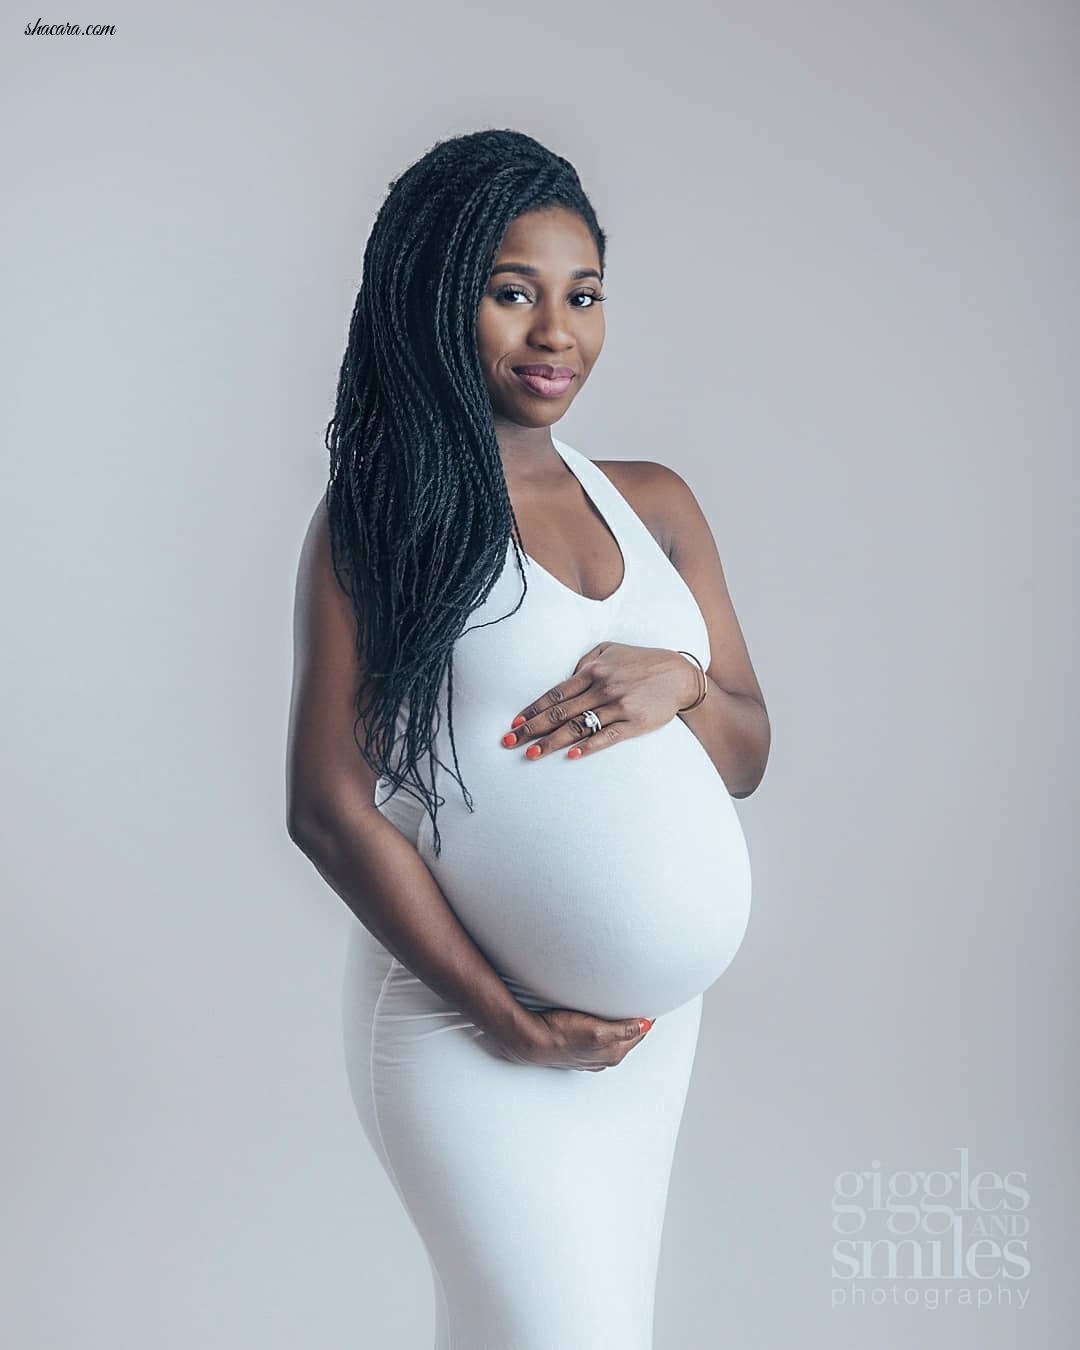 3 Plus 1! See Gorgeous Photos Of Adanna & David’s Maternity Shoot